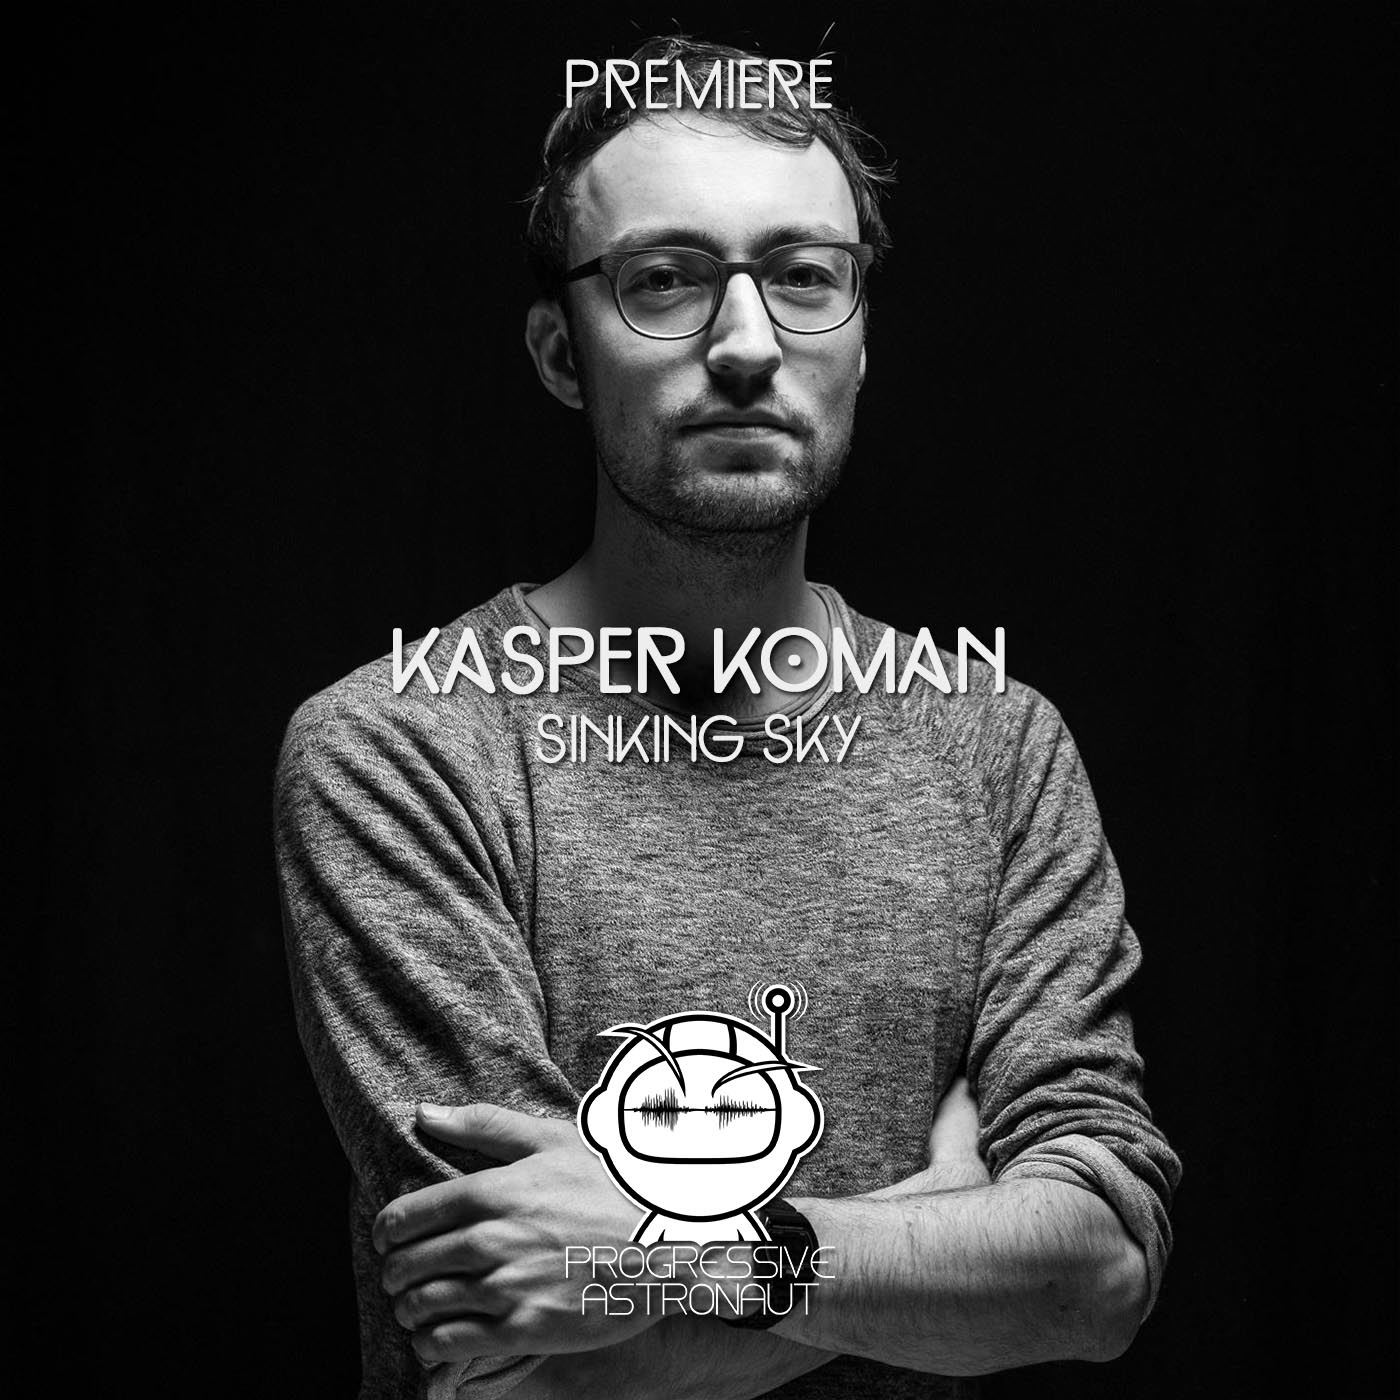 Kasper Koman – Sinking Sky [meanwhile] – Progressive Astronaut